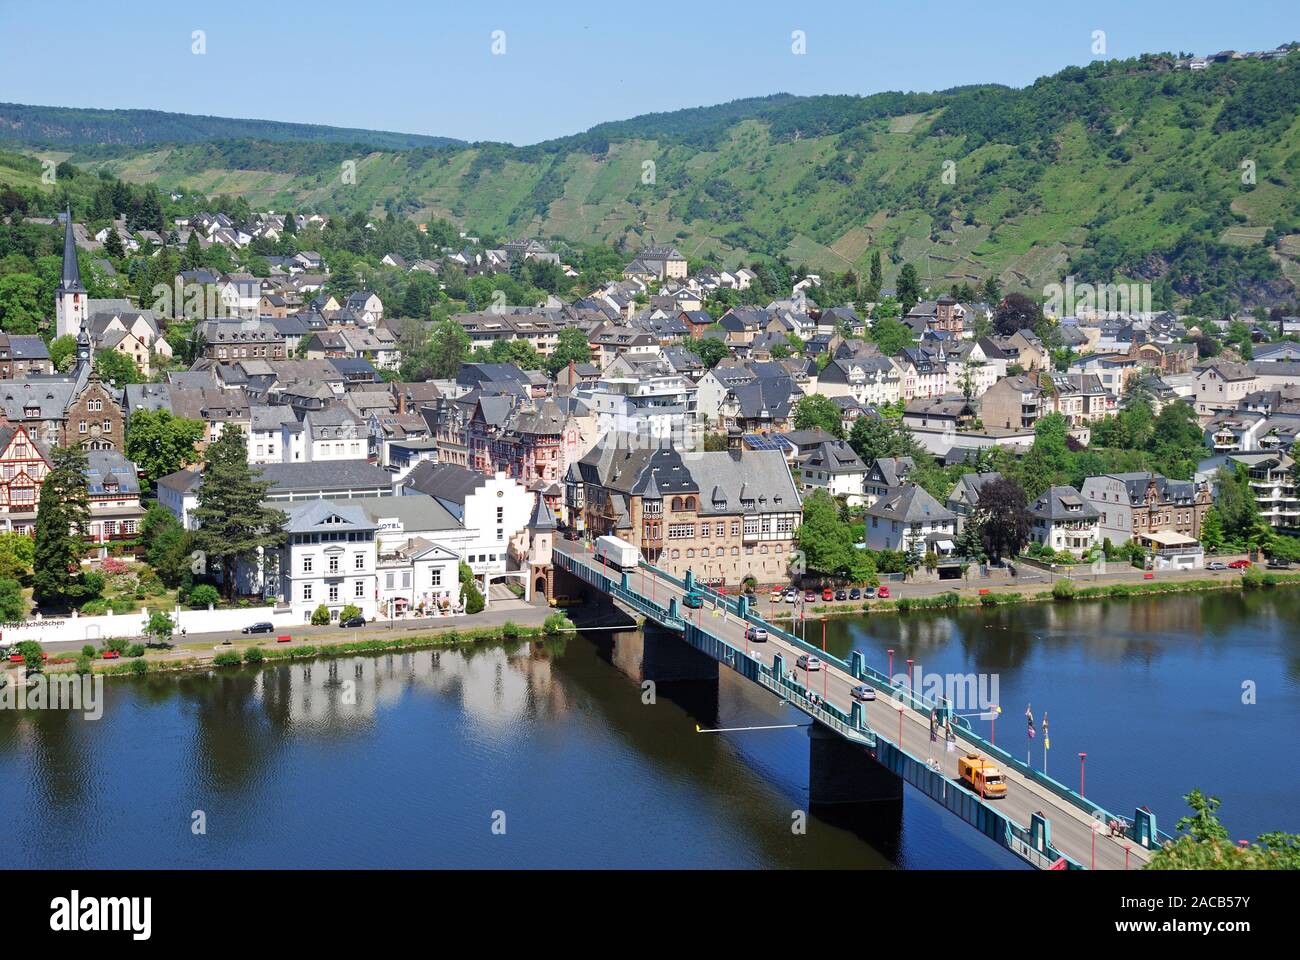 Traben-Trarbach, district de Traben, Moselle, district de Bernkastel-Wittlich, Rhénanie-Palatinat, Allemagne, Europe, PublicGrou Banque D'Images